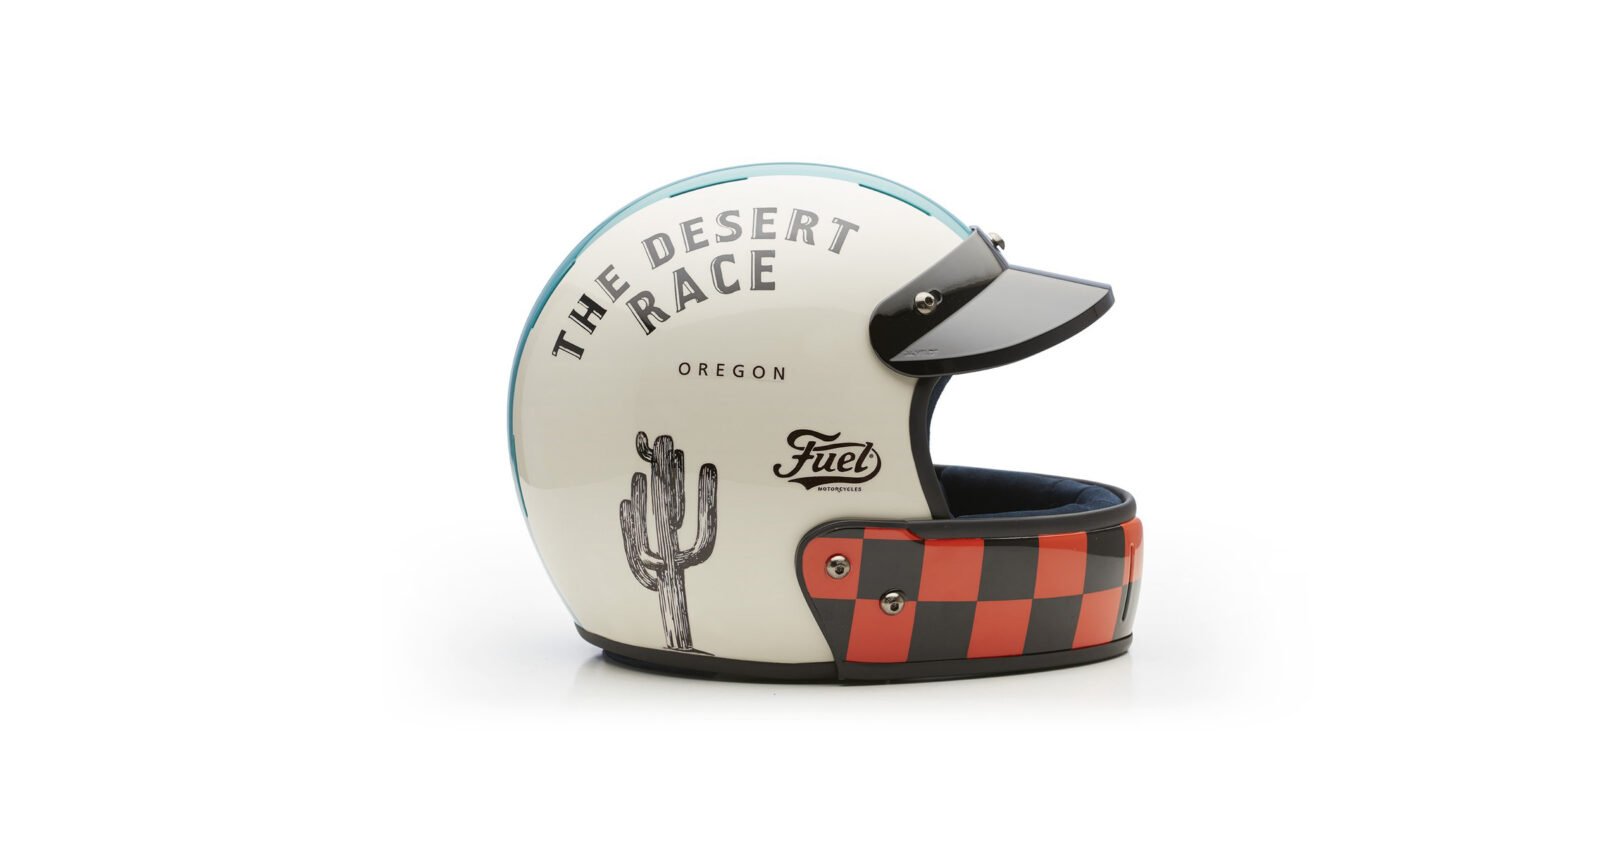 Veldt Desert Race x Fuel Motorcycles Limited Edition Helmet